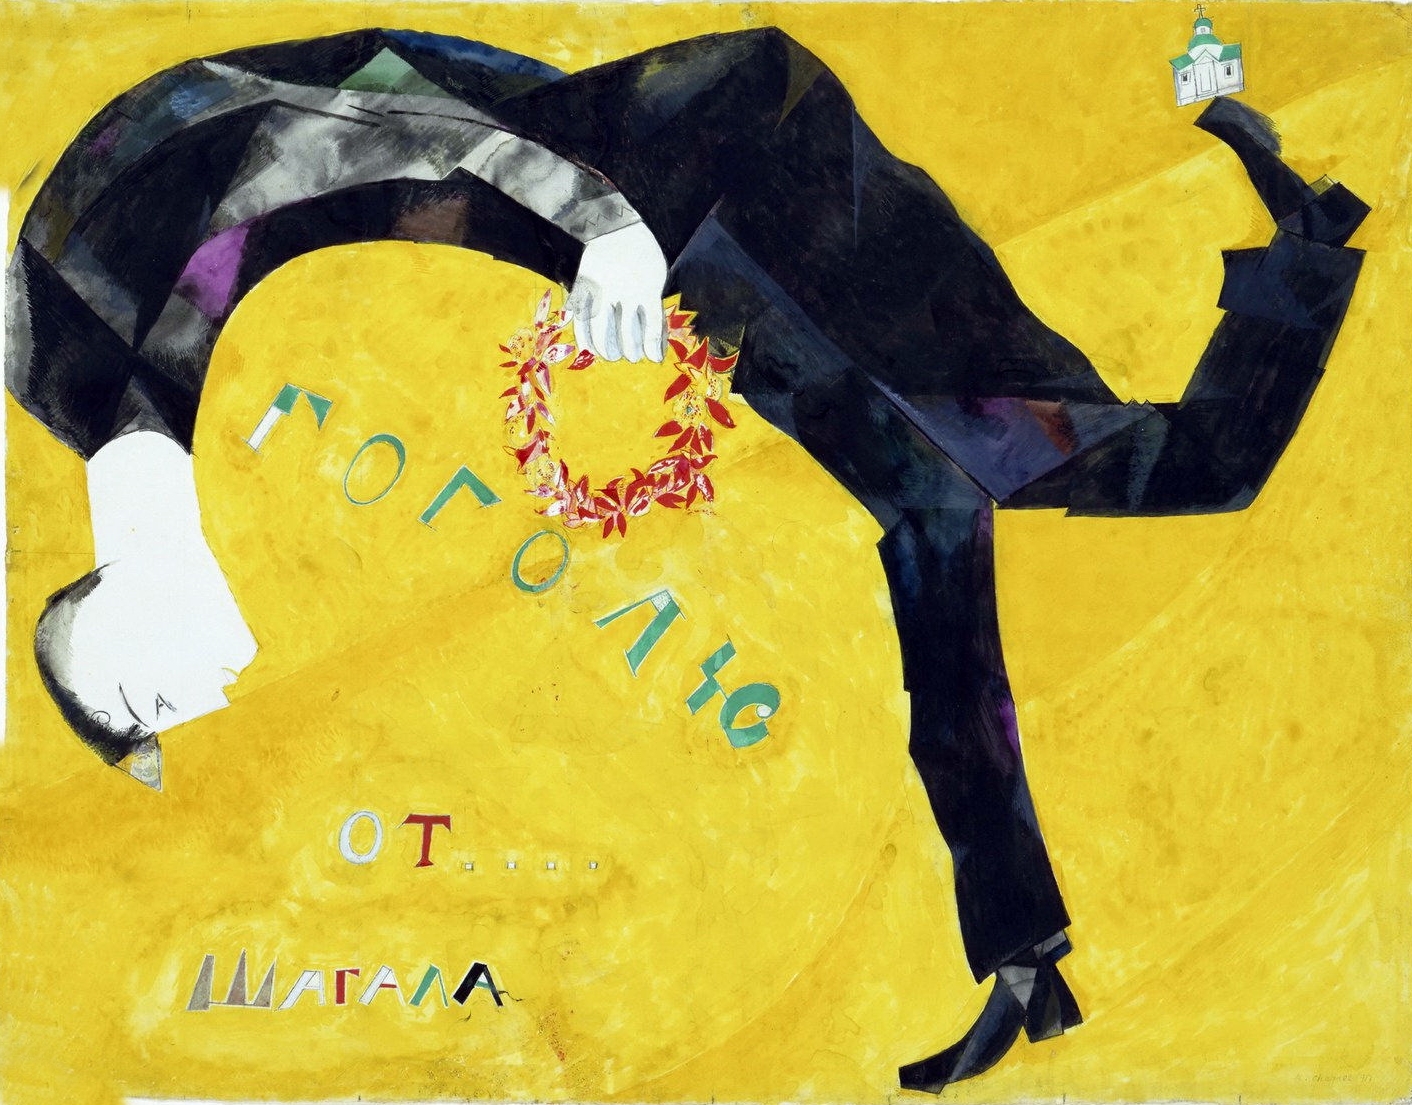 Marc+Chagall-1887-1985 (240).jpg